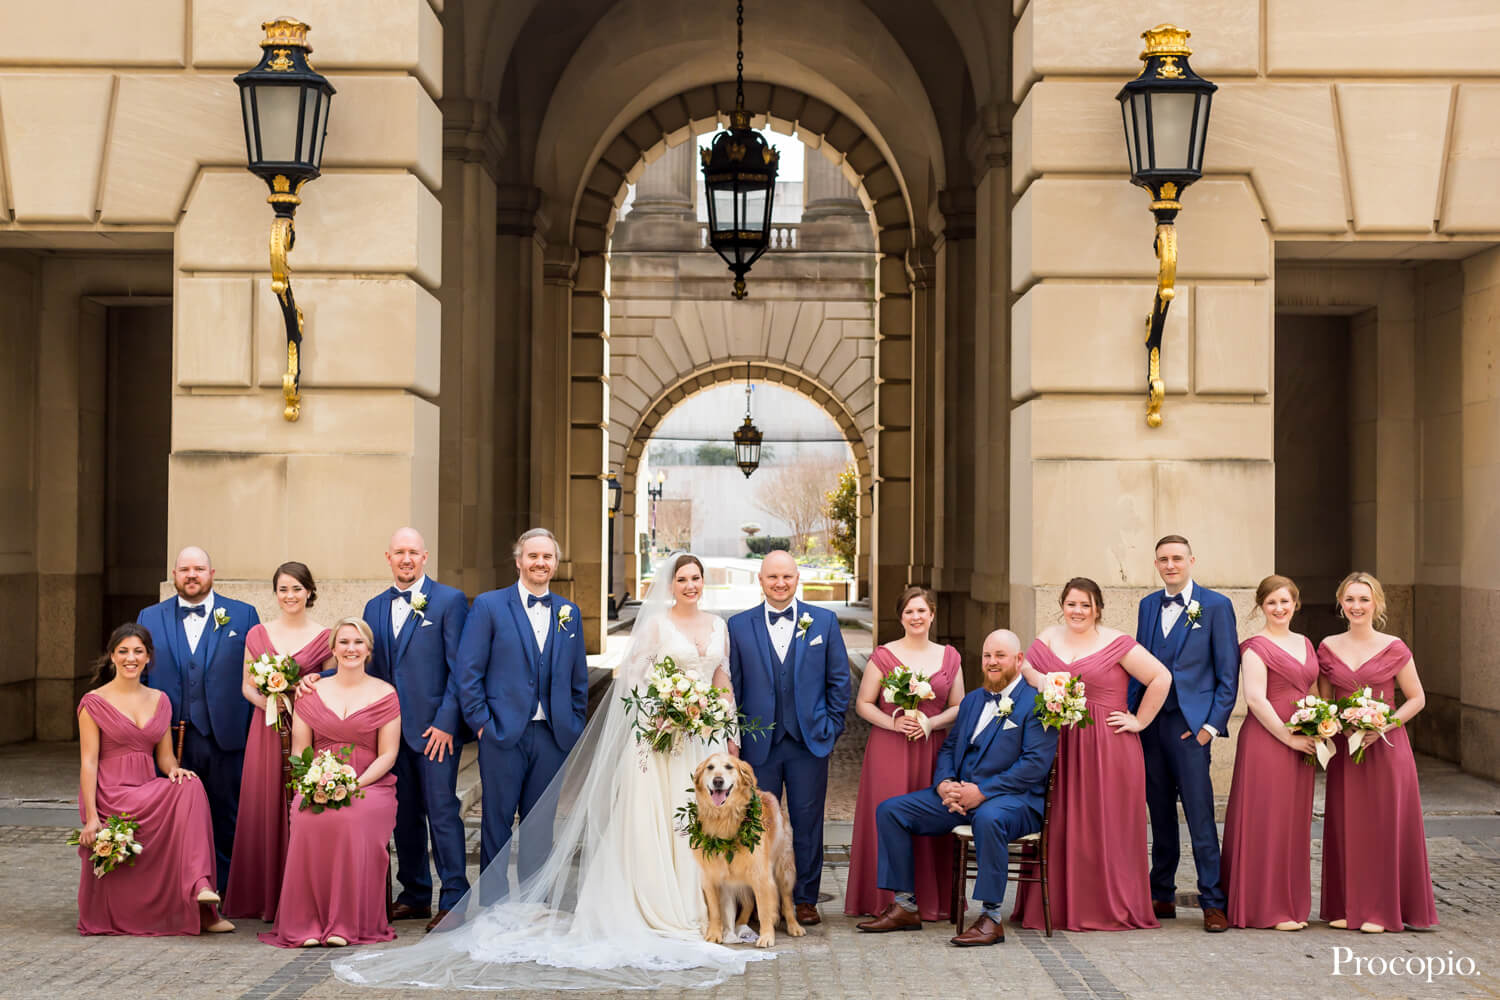 Classic bridal portrait with dog - Michelle Whyte - best Washington DC wedding planner - photo by Procopio Photography